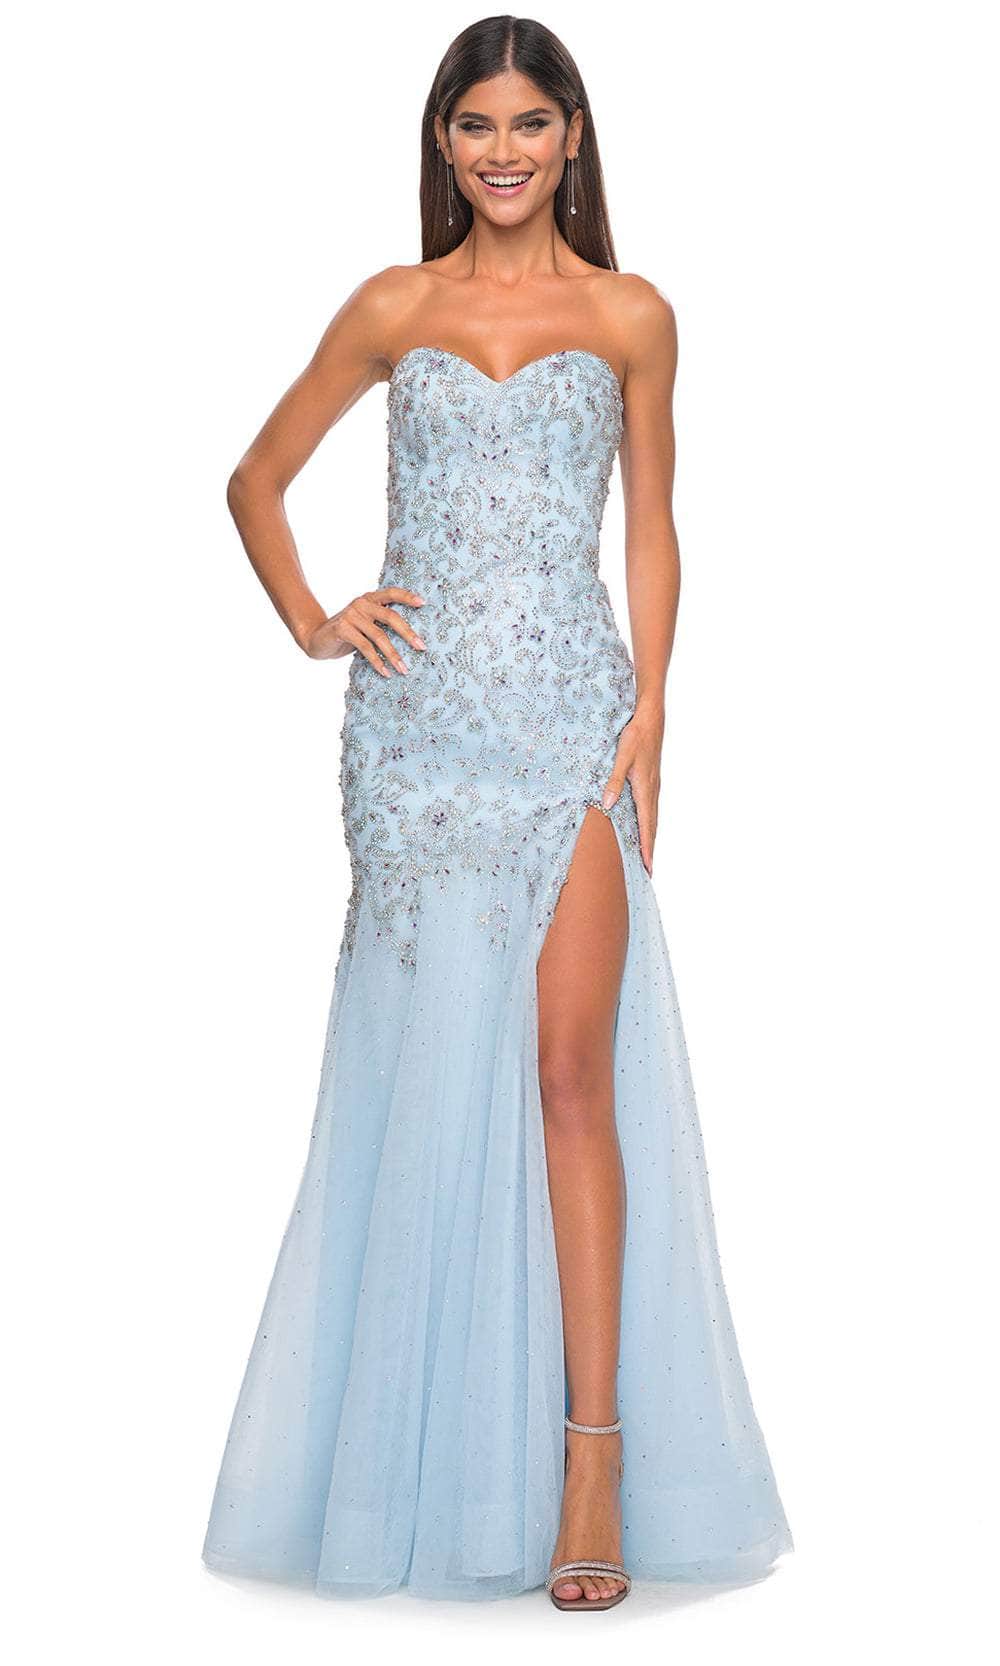 La Femme 32197 - Applique Ornate Prom Dress Prom Dresses